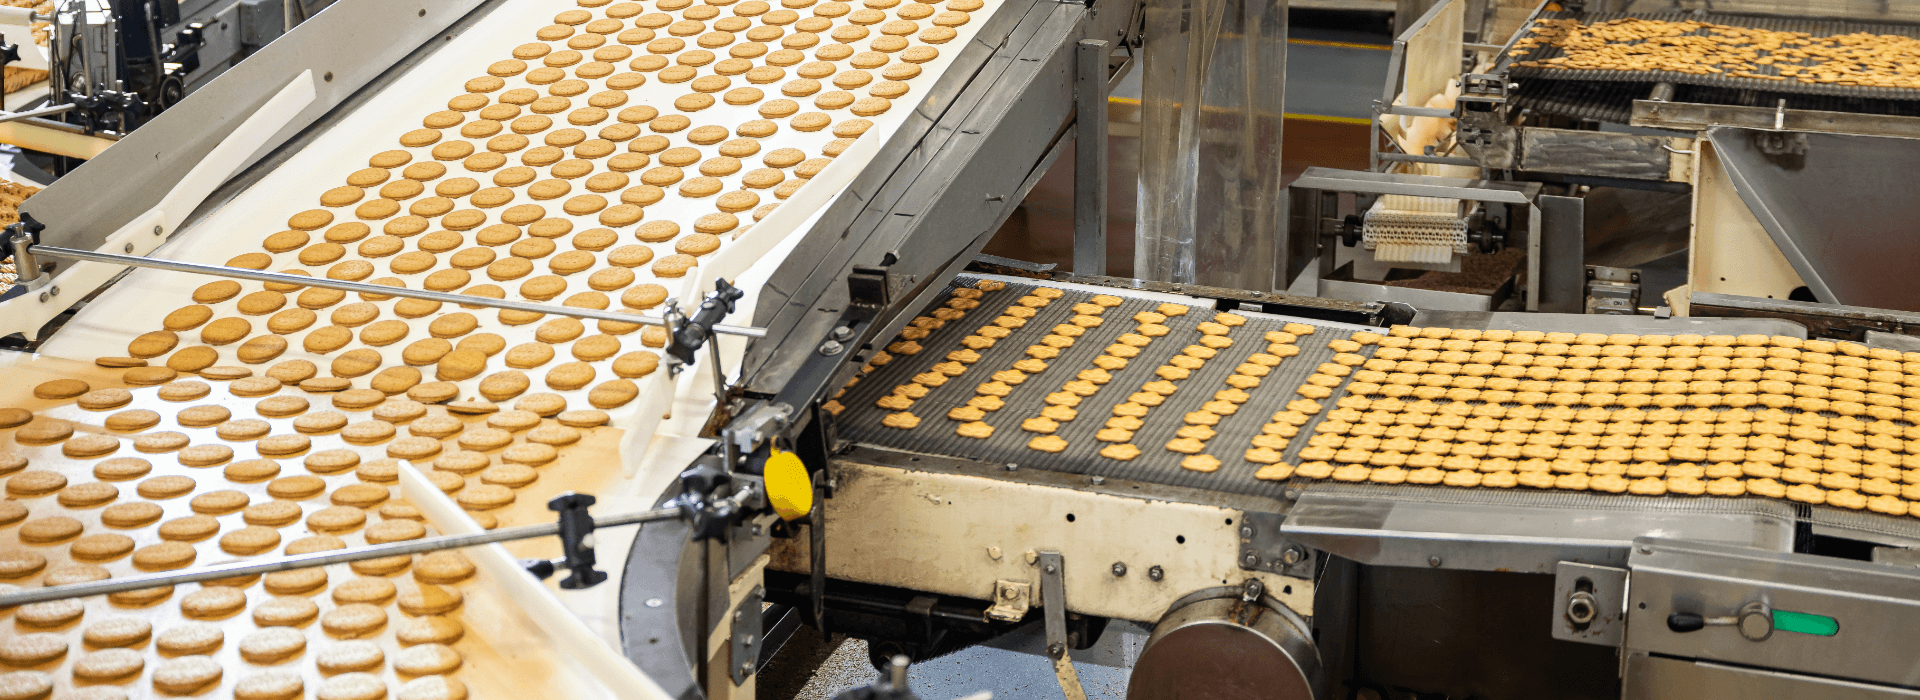 Commercial Bakeries production line